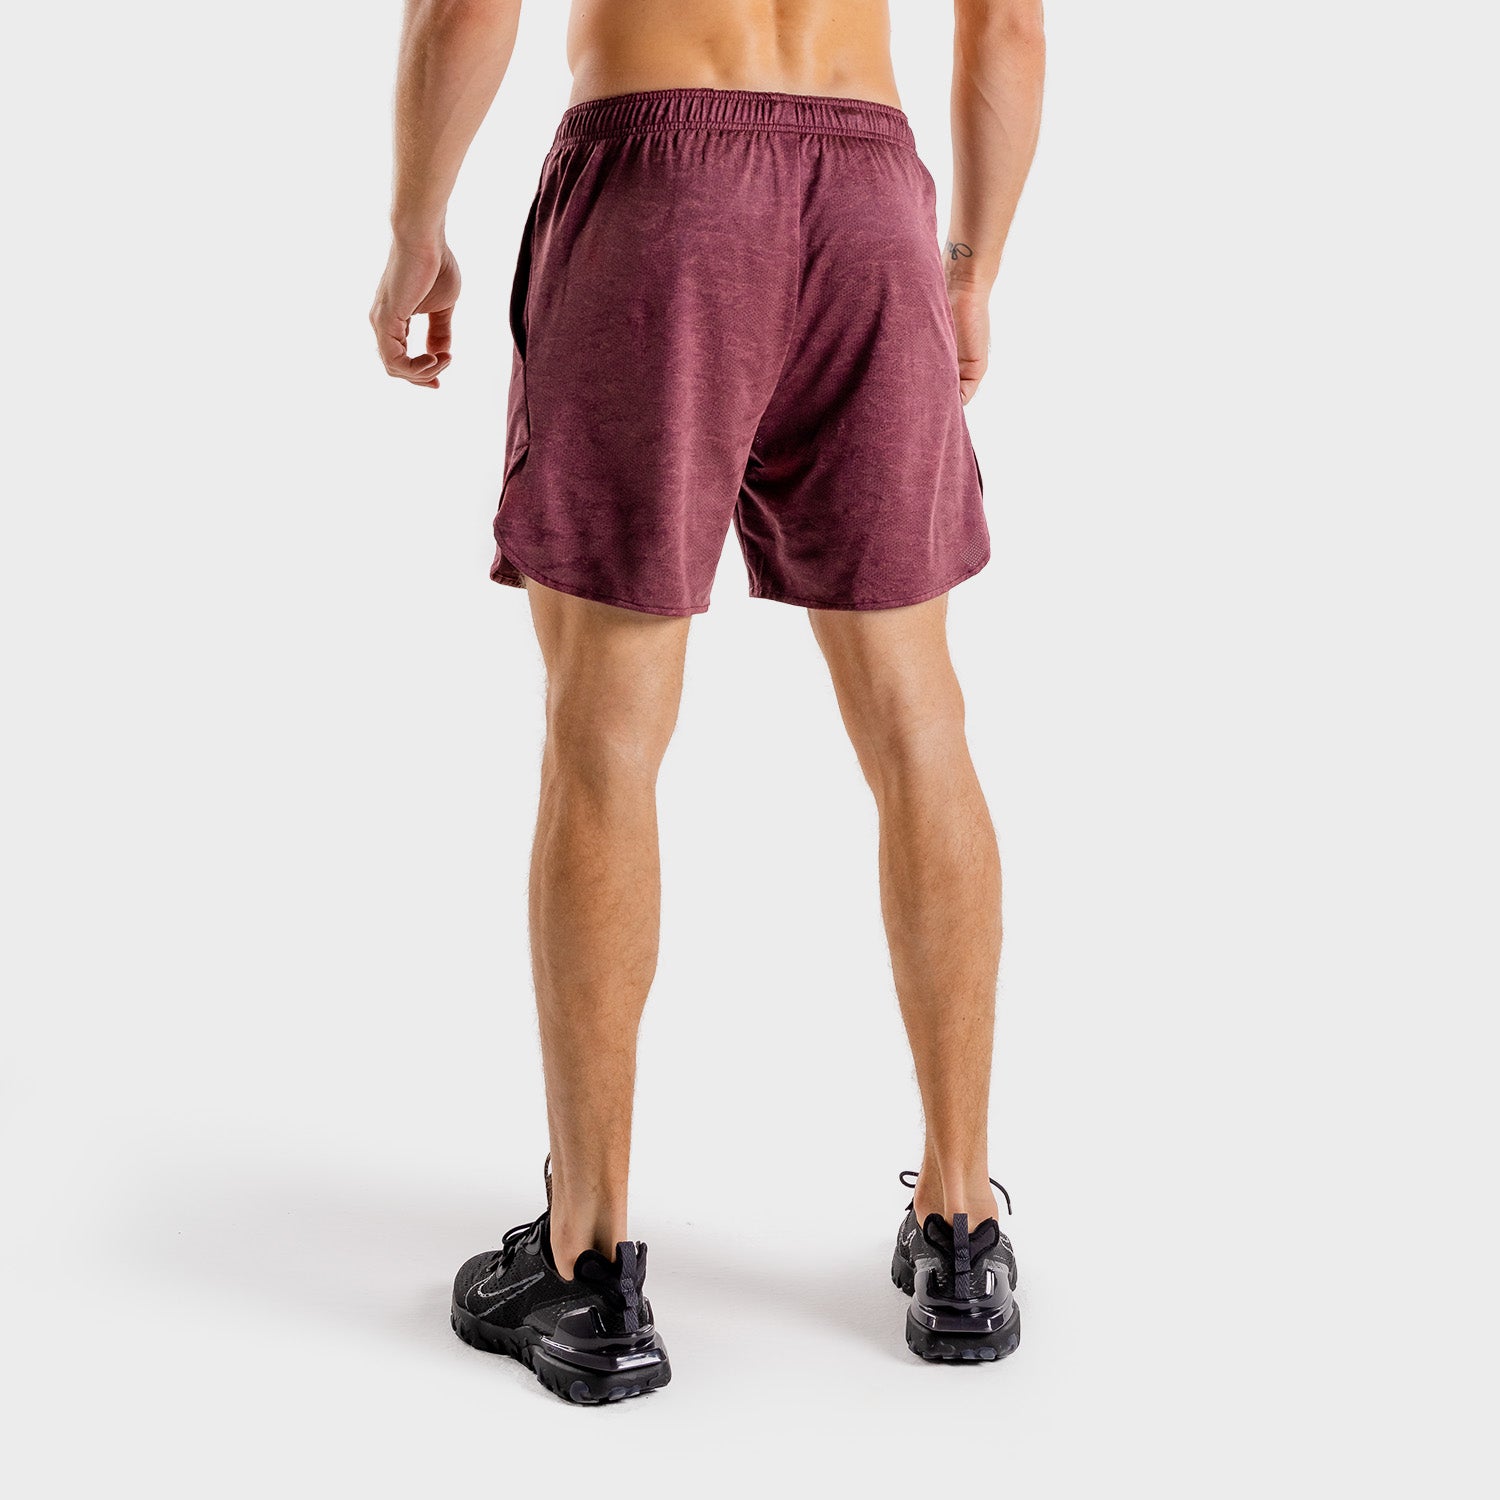 squatwolf-workout-short-for-men-wolf-gym-shorts-burgundy-gym-wear